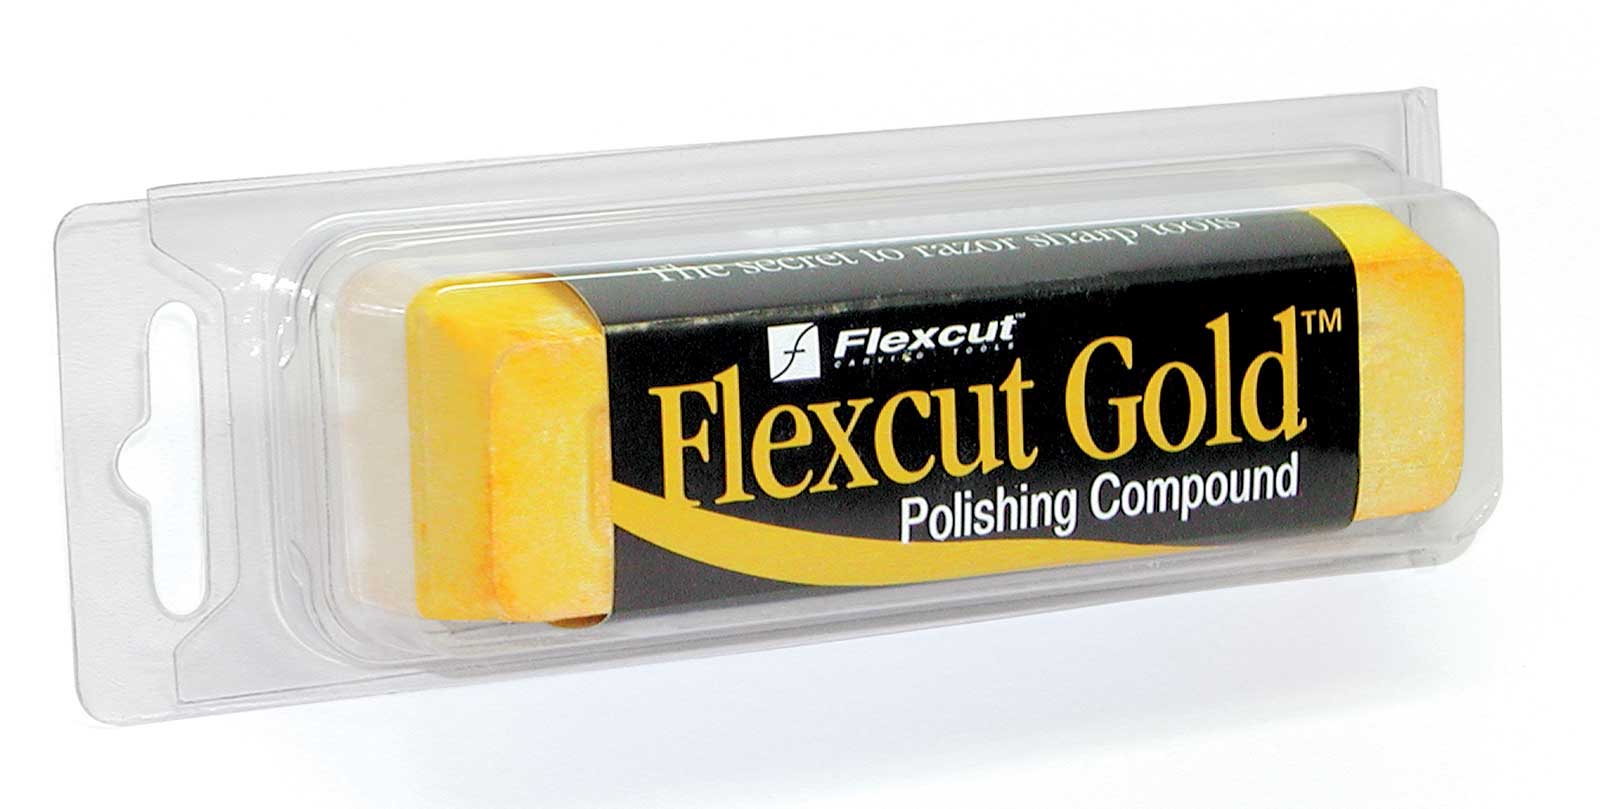 Flexcut Gold Polishing Compound